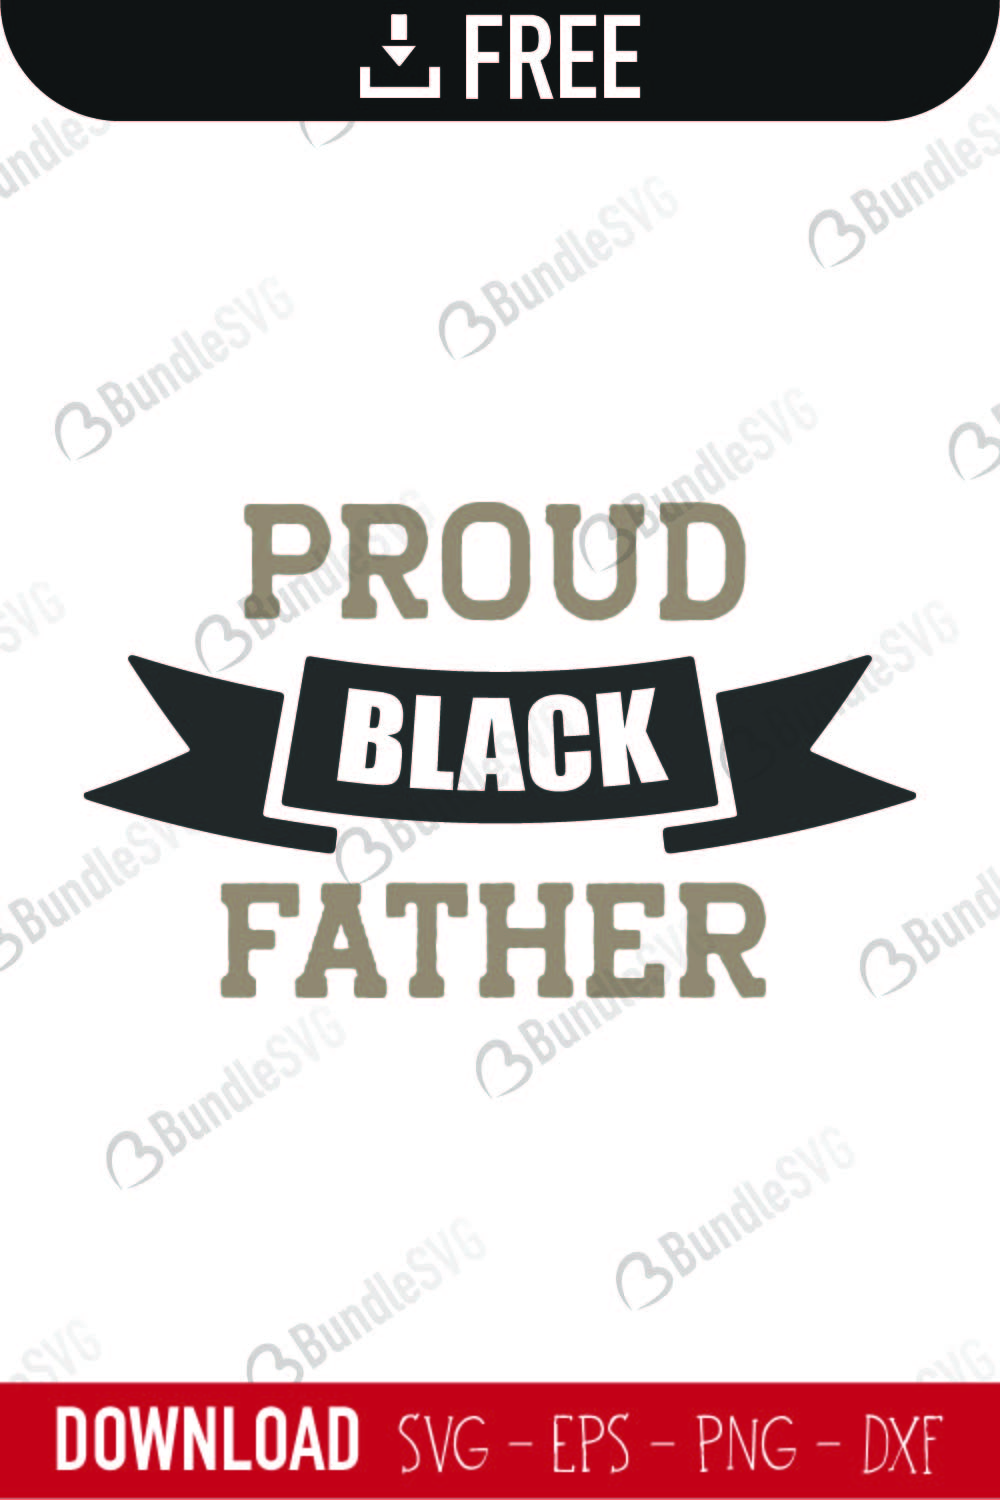 Proud Black Father SVG Cut Files Free Download | BundleSVG